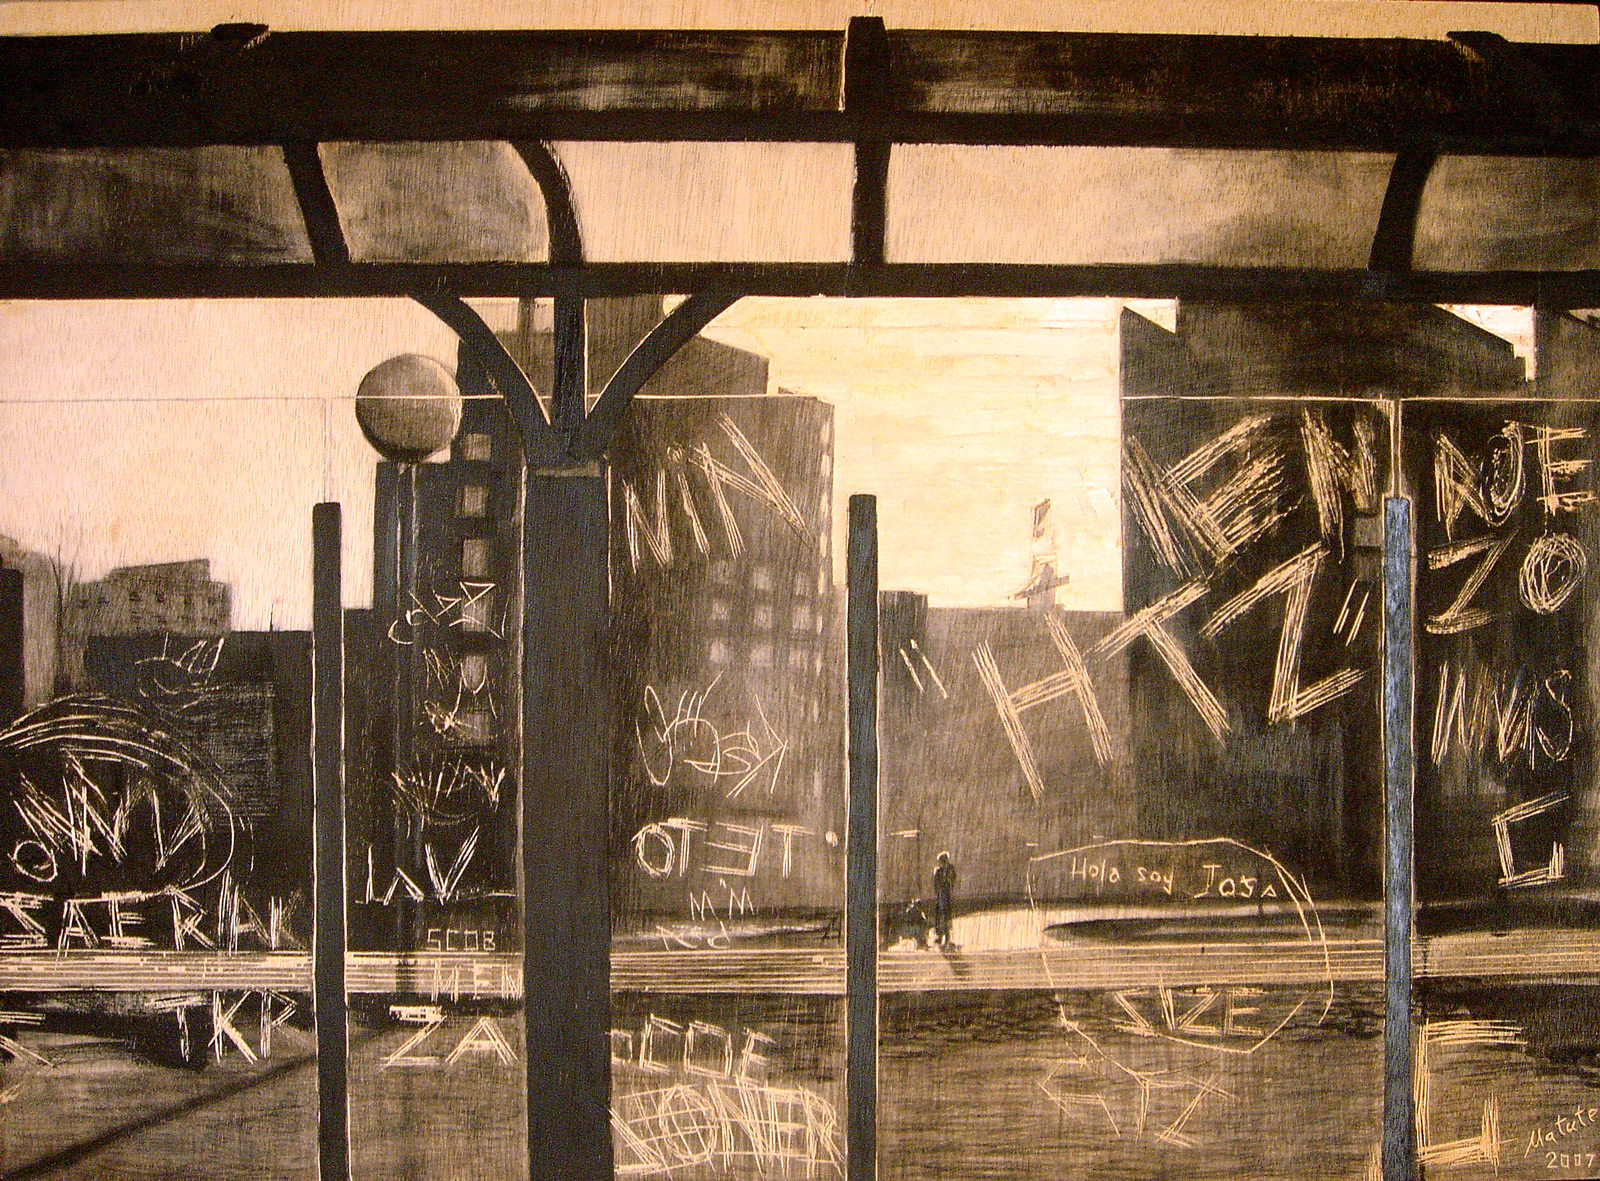 Parada de autobús a contraluz - Lápiz Conté, carboncillo y tinta china sobre madera de contrachapado tallada - 70x50 cm - 2007 - Matute Art